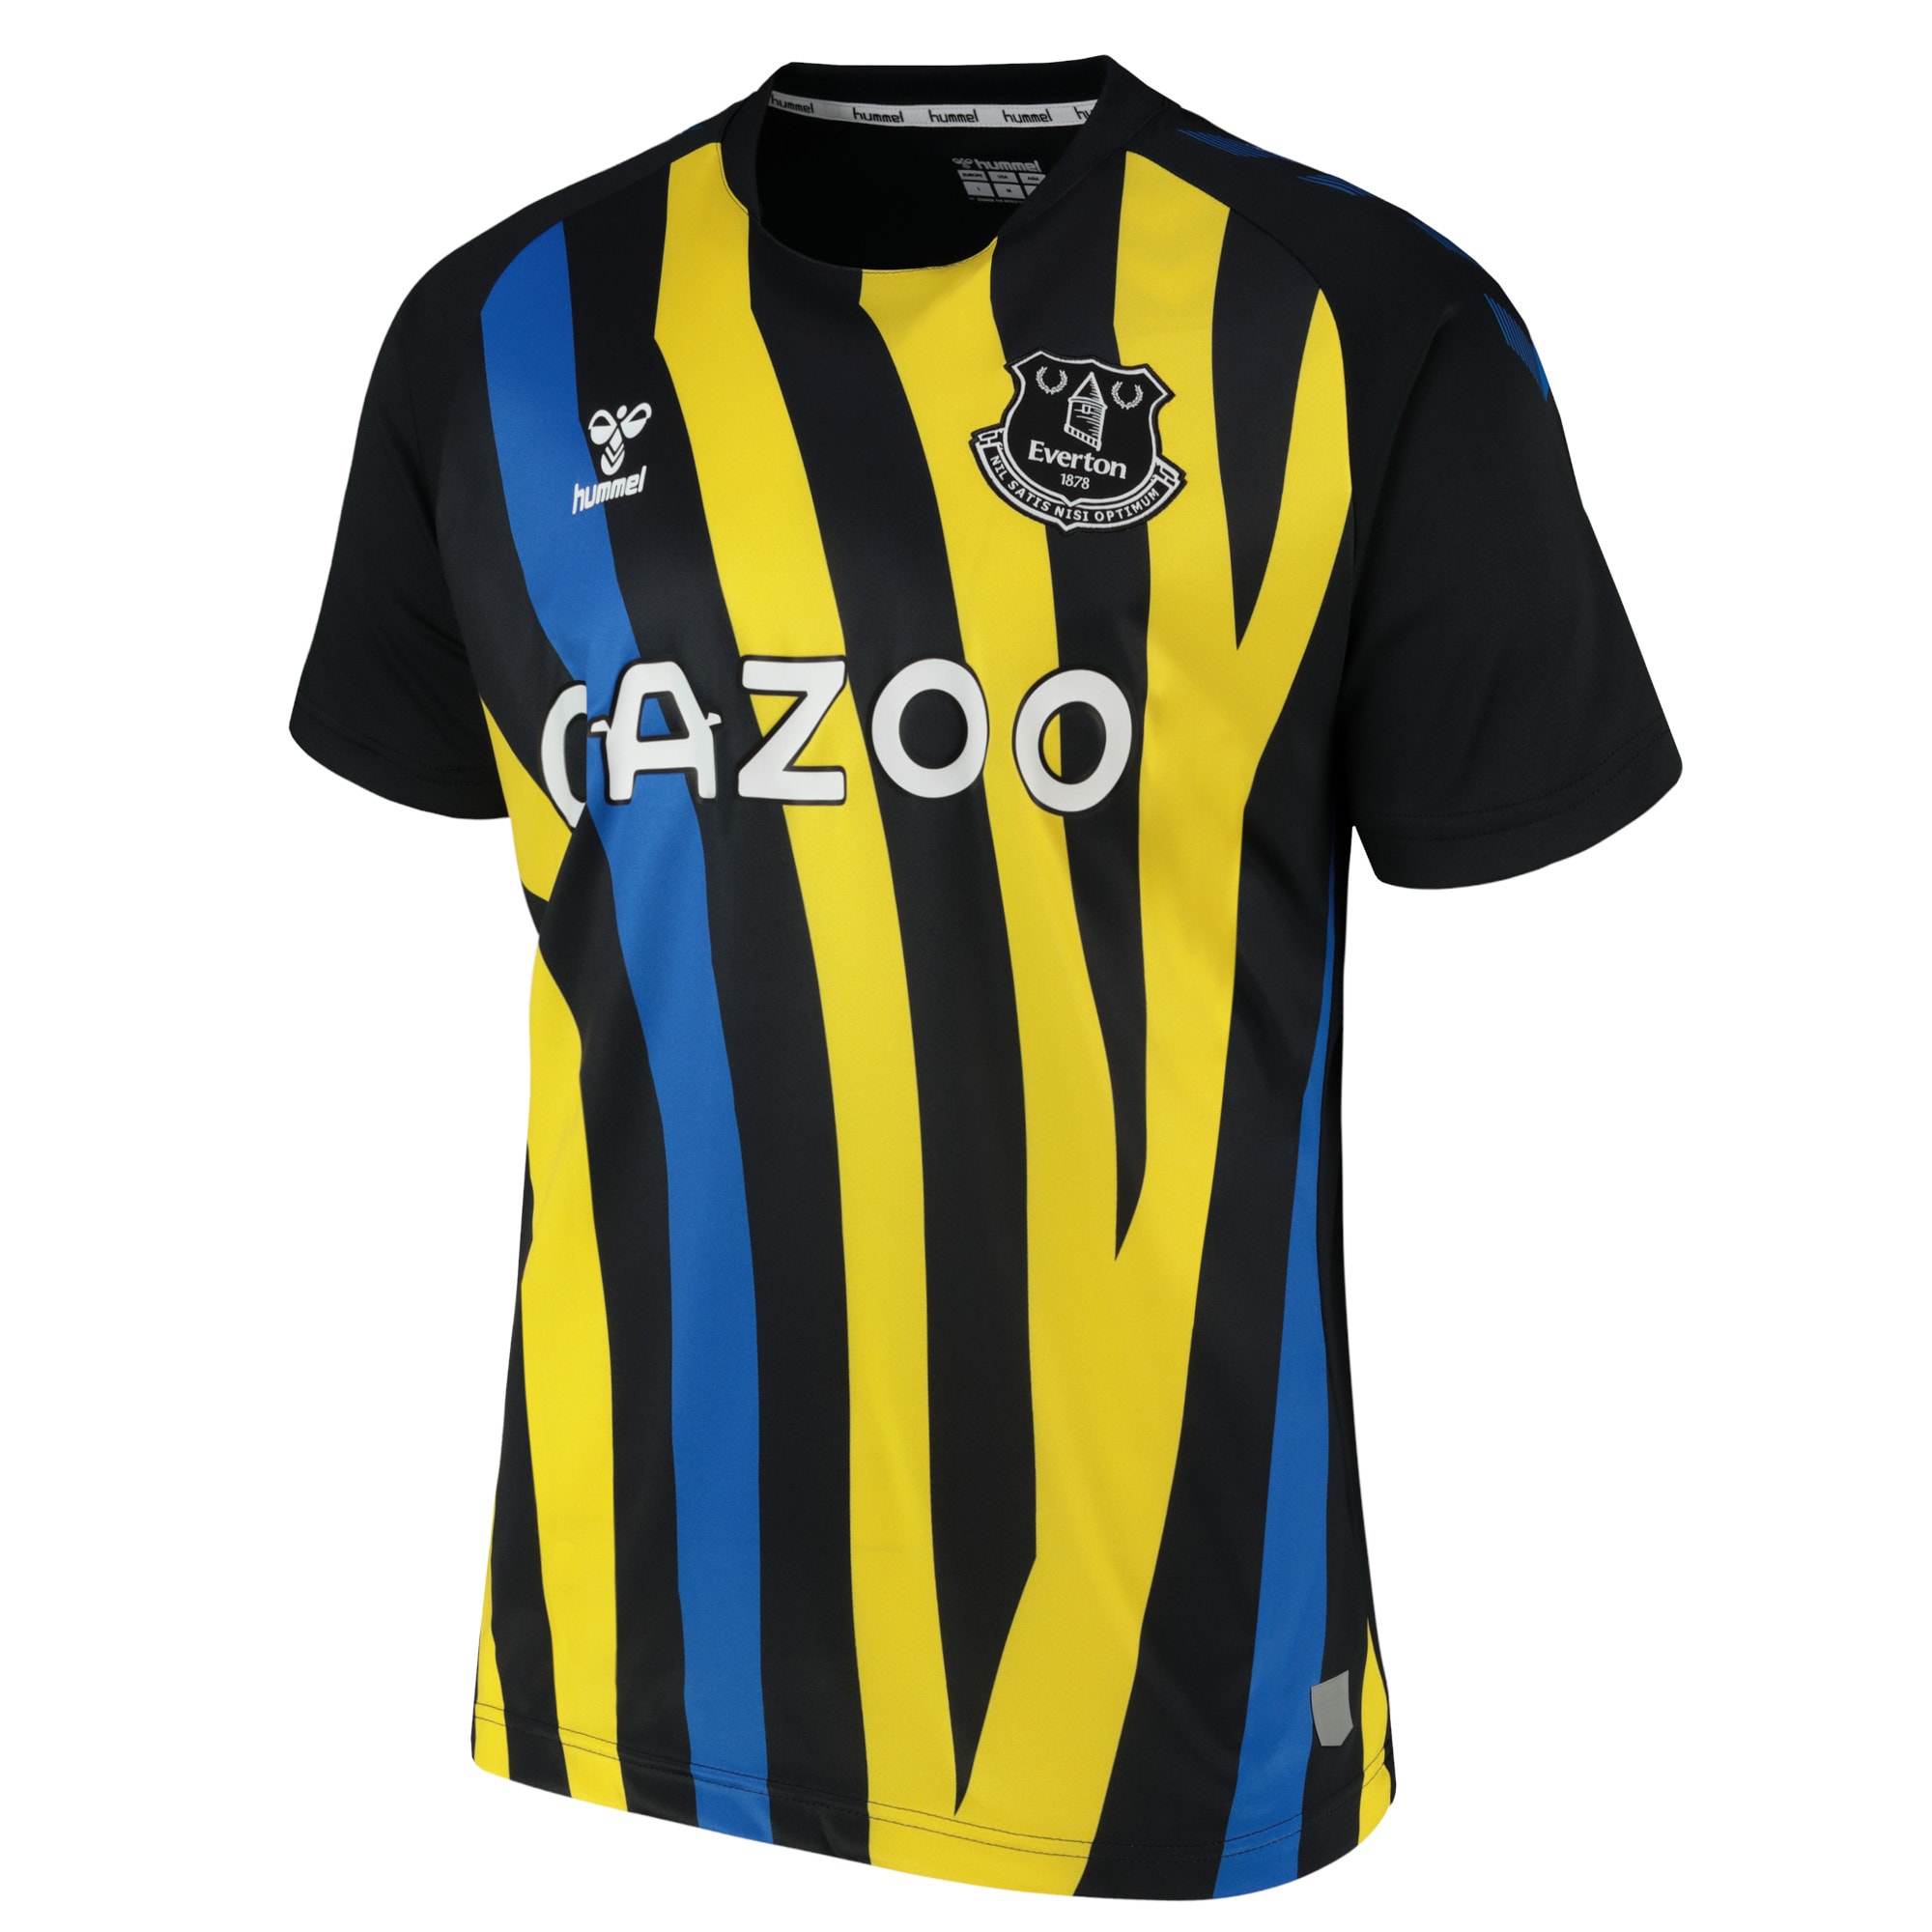 Men's Everton Jerseys Black 2021/22 Home Printed Goalkeeper Style